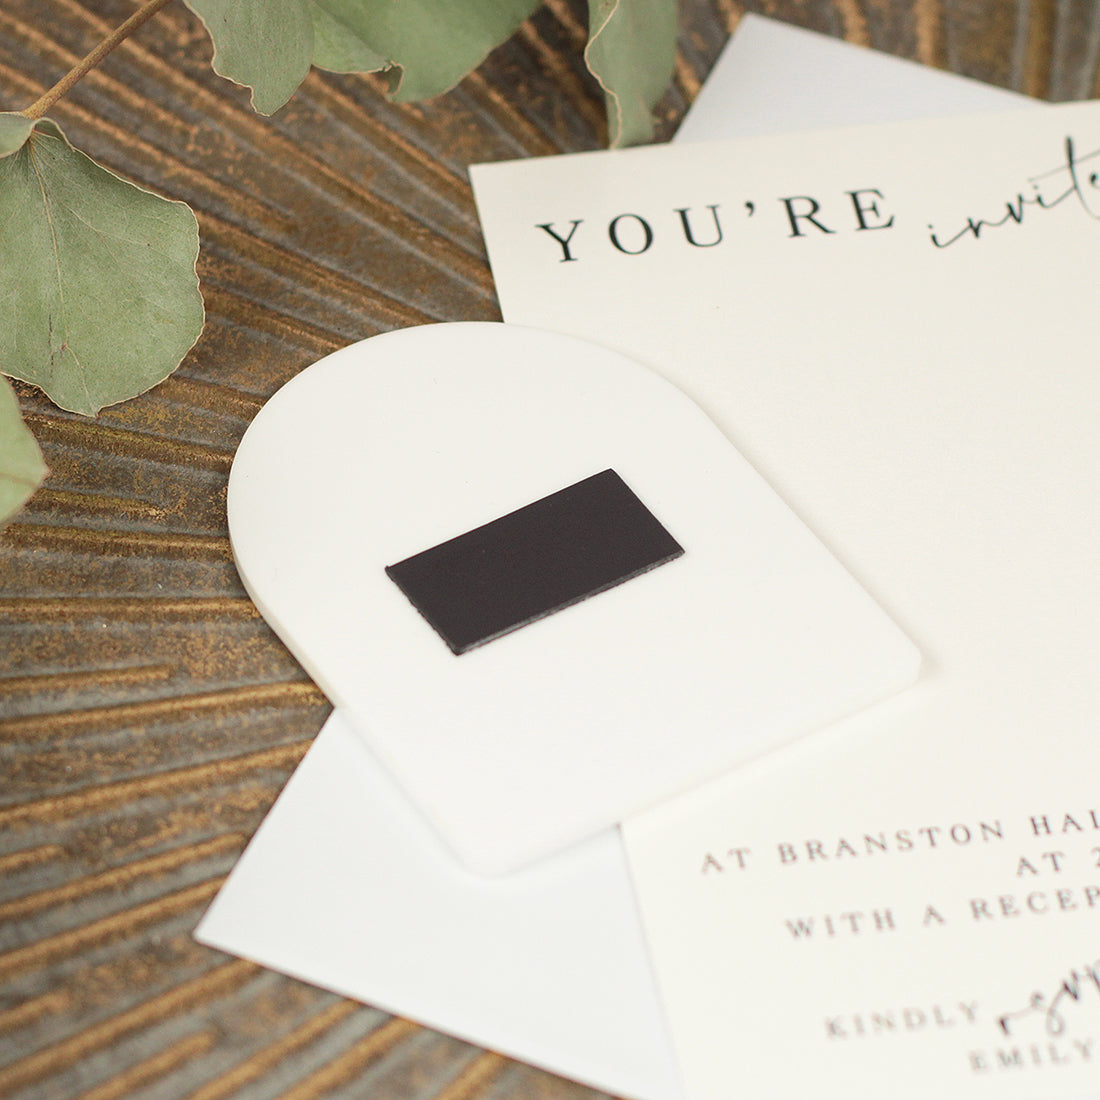 Modern Acrylic Photo Wedding Invitation Magnets & Cards